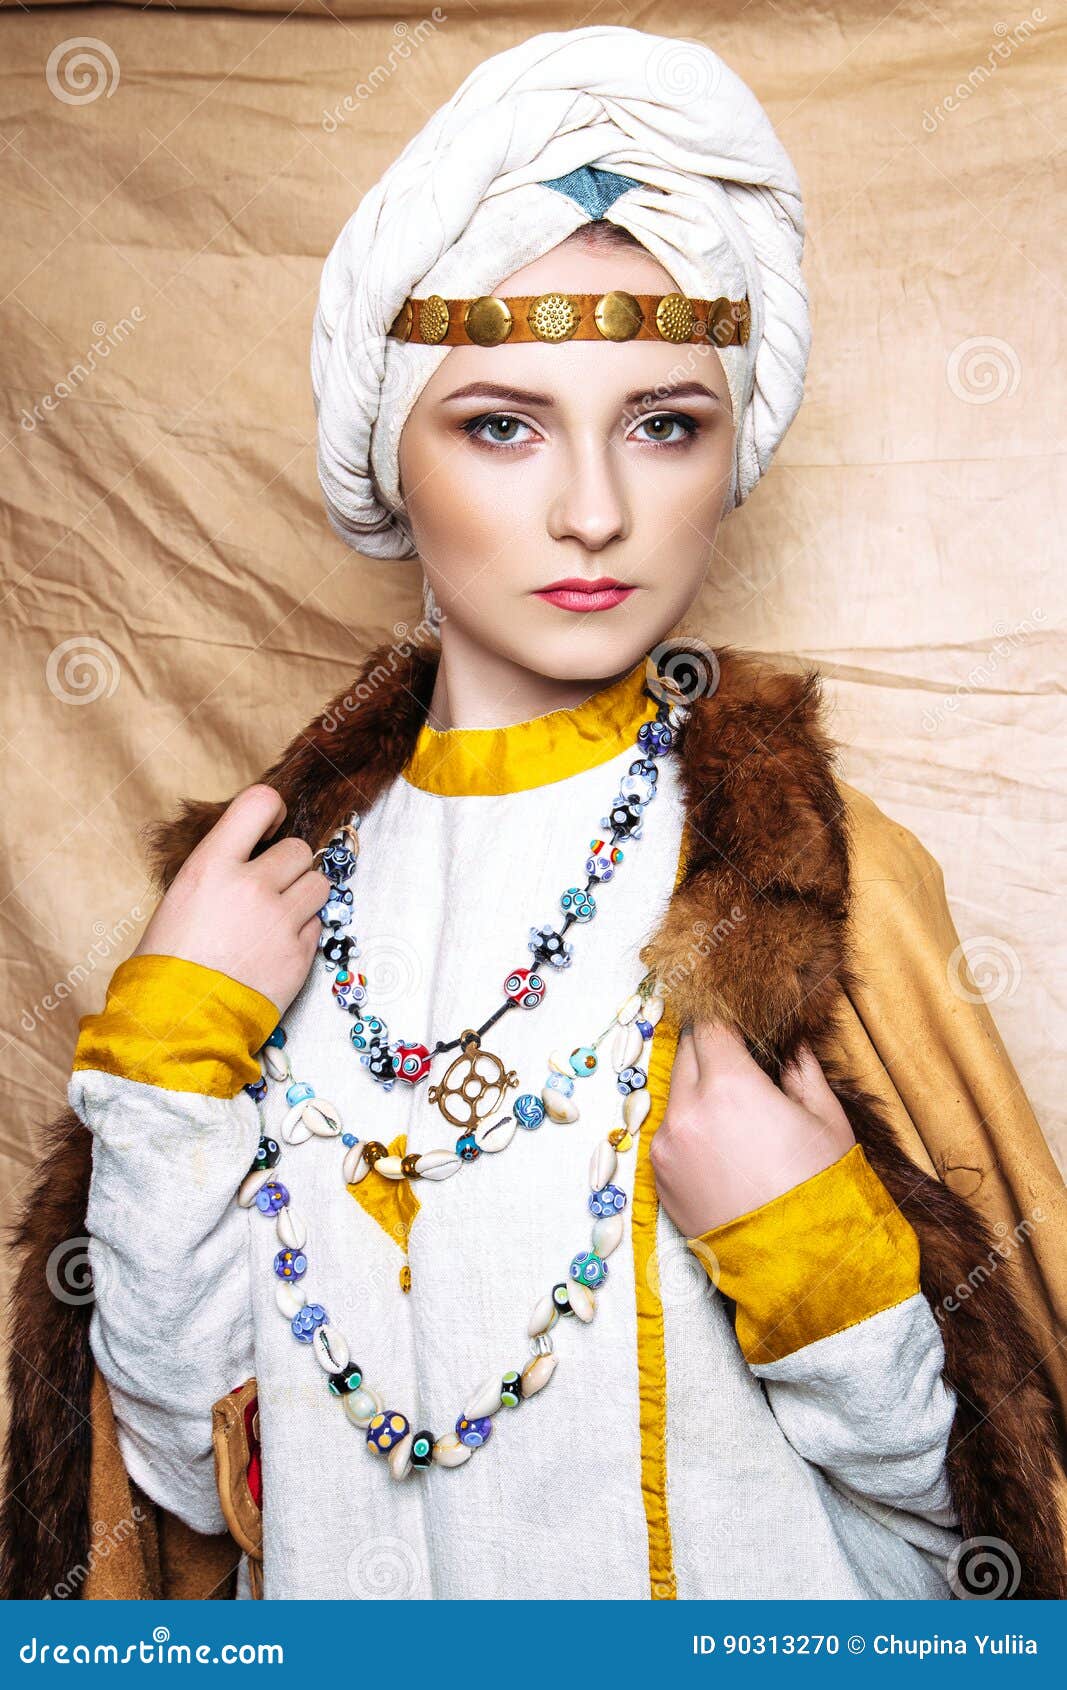 https://thumbs.dreamstime.com/z/portrait-slavic-women-past-national-vintage-clothing-woman-historical-reconstruction-studio-90313270.jpg